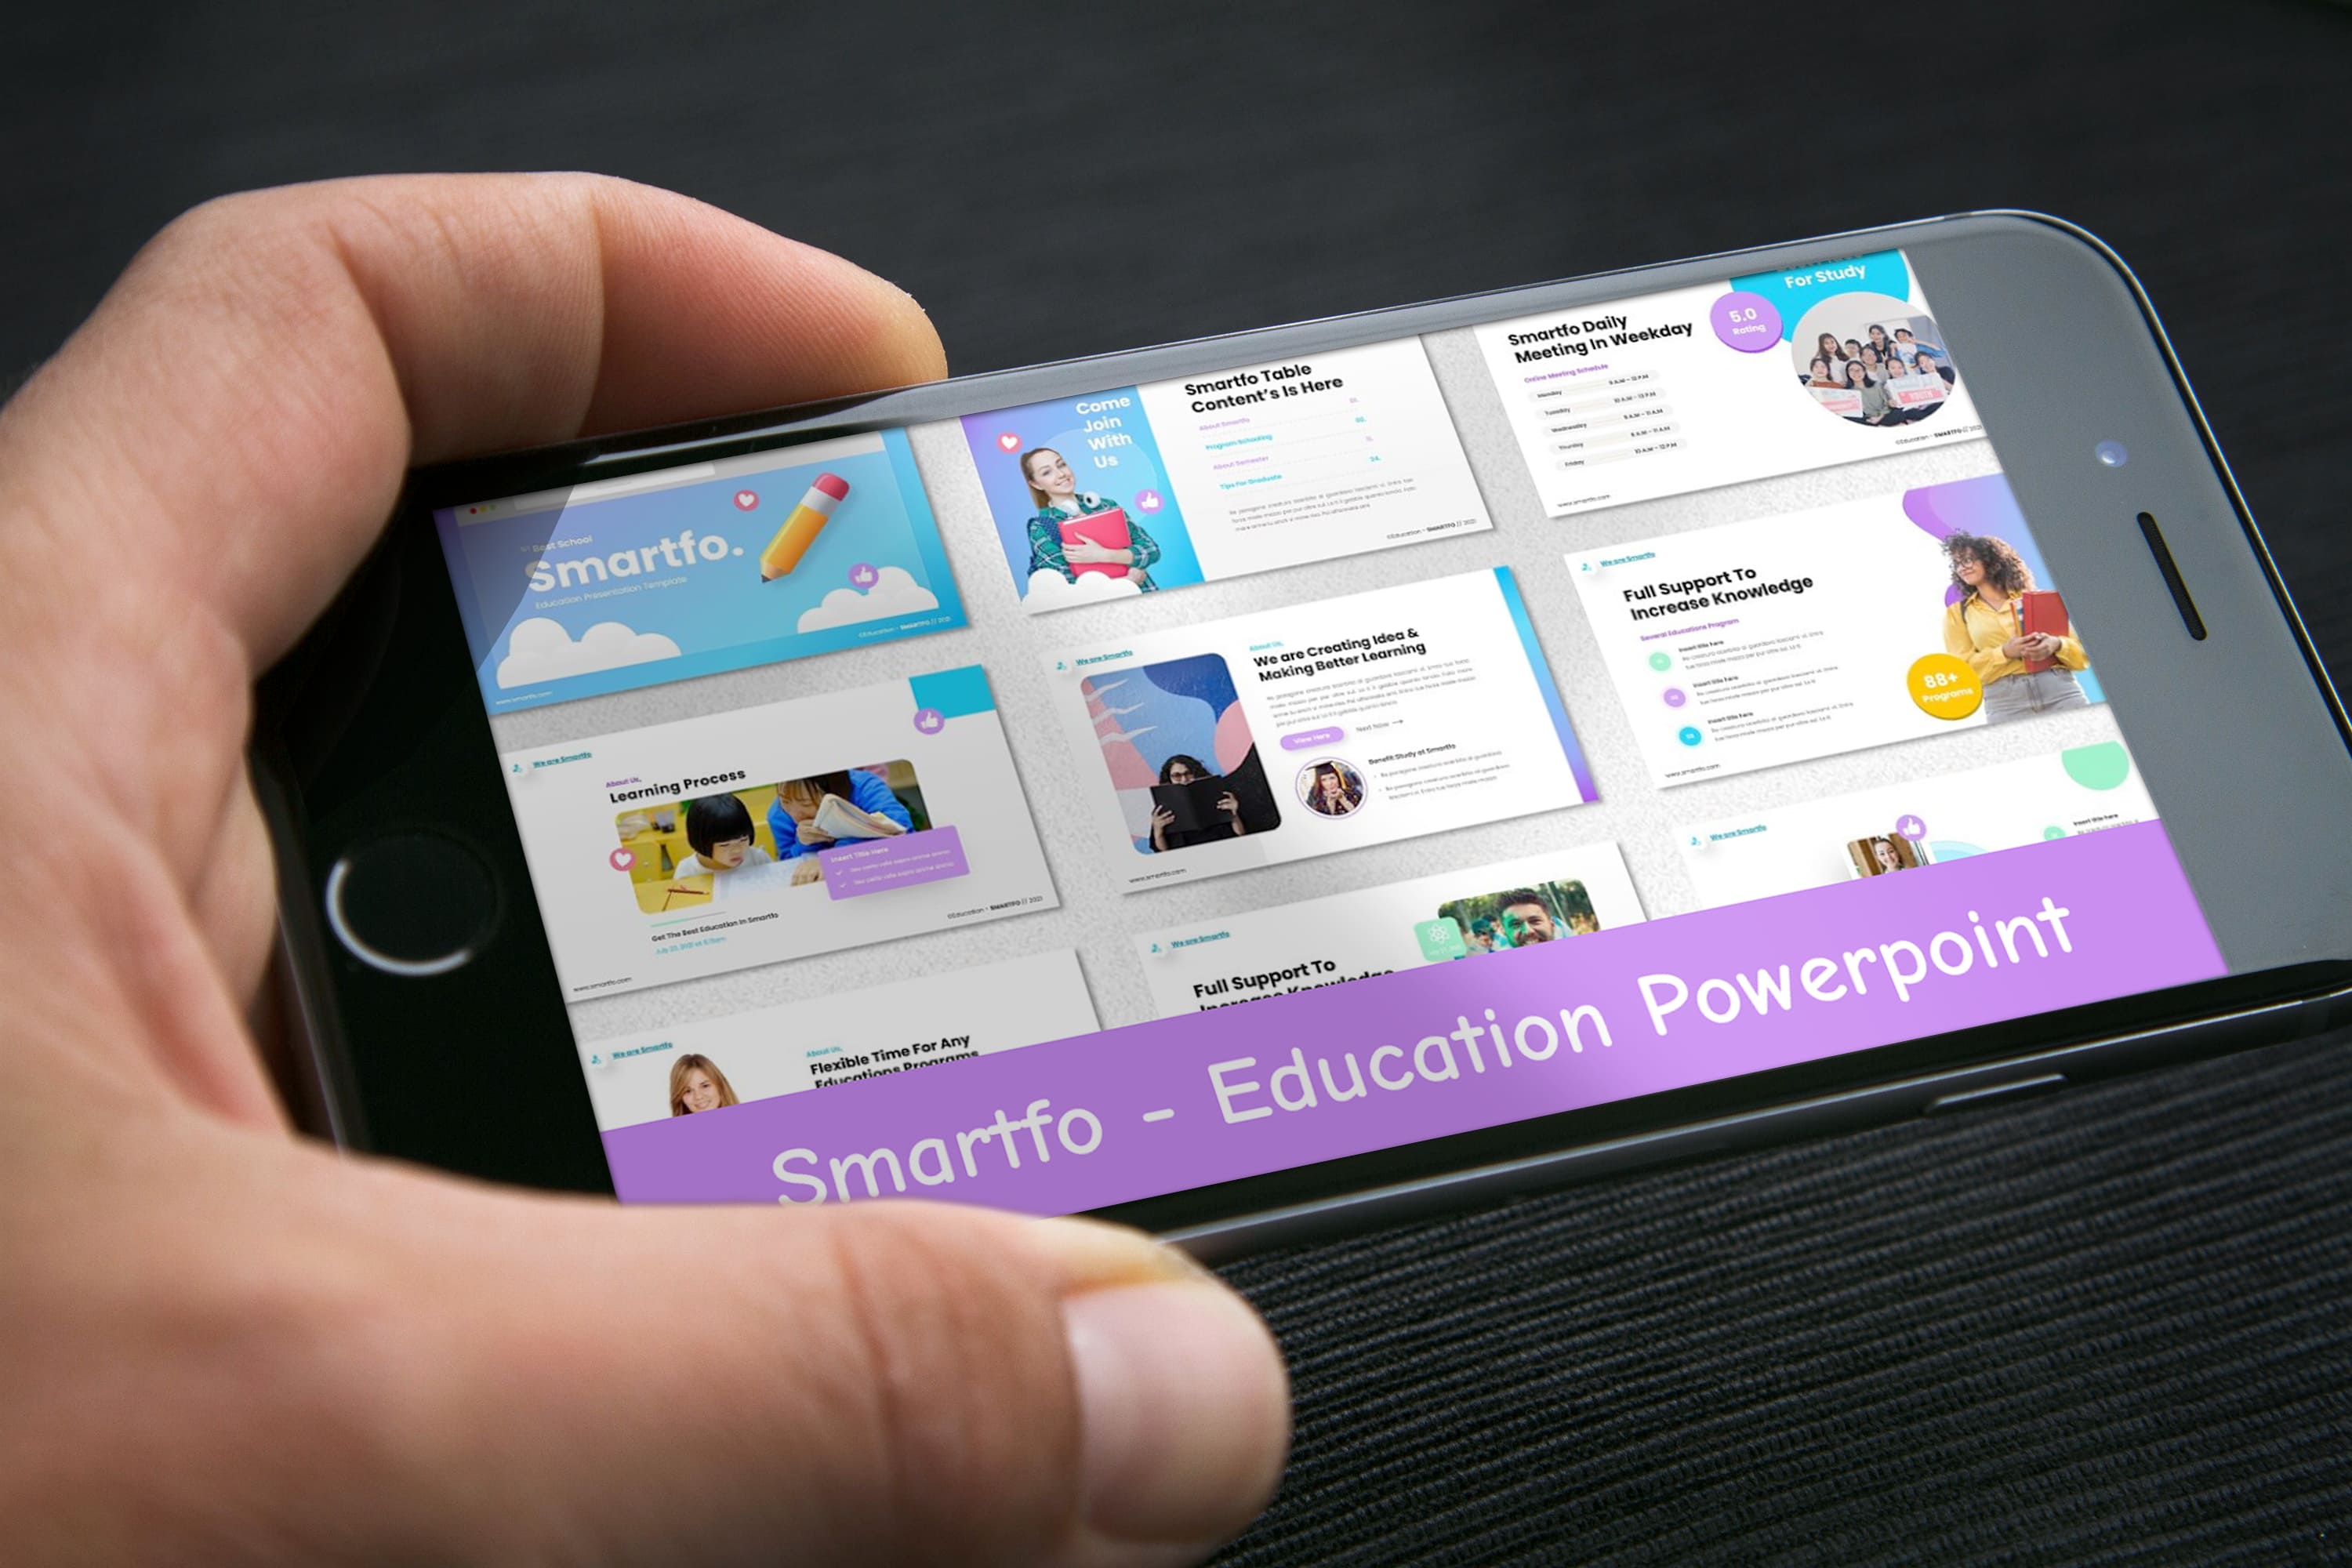 Smartfo - Education Powerpoint - Mockup on Smartphone.